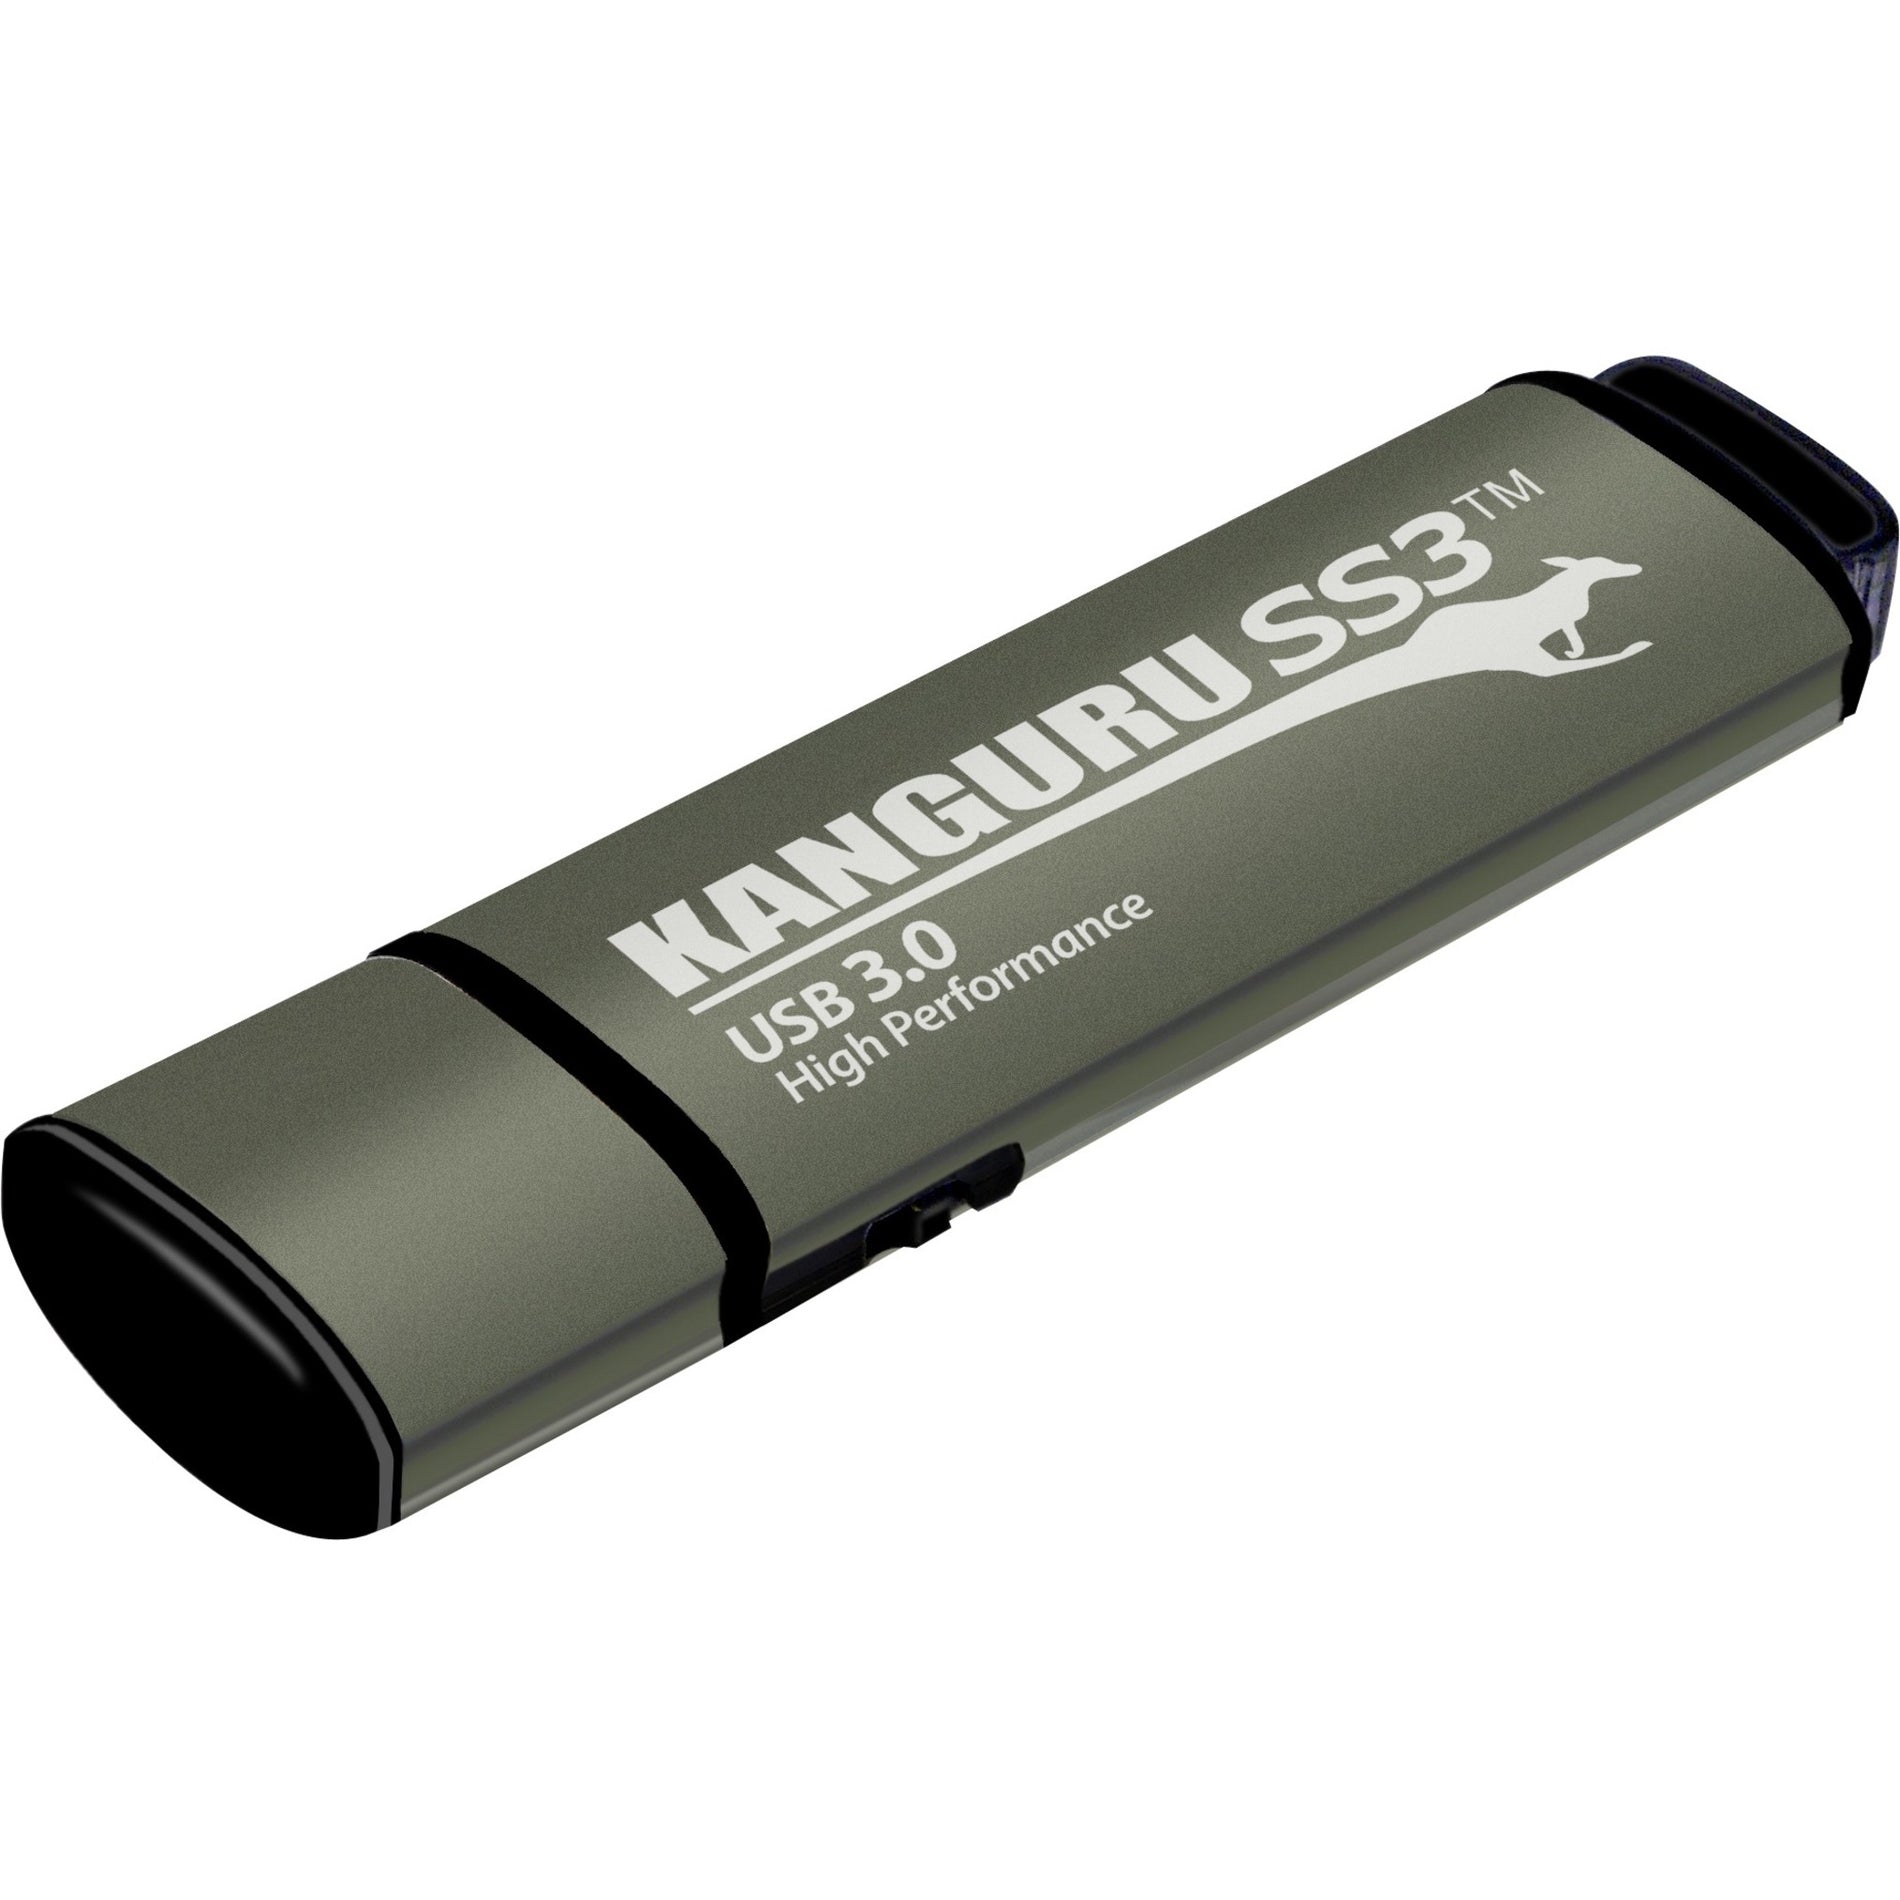 Kanguru KF3WP-256G SS3 محرك أقراص USB 3.0 فلاش مع مفتاح حماية الكتابة المادي، ٢٥٦ جيجابايت